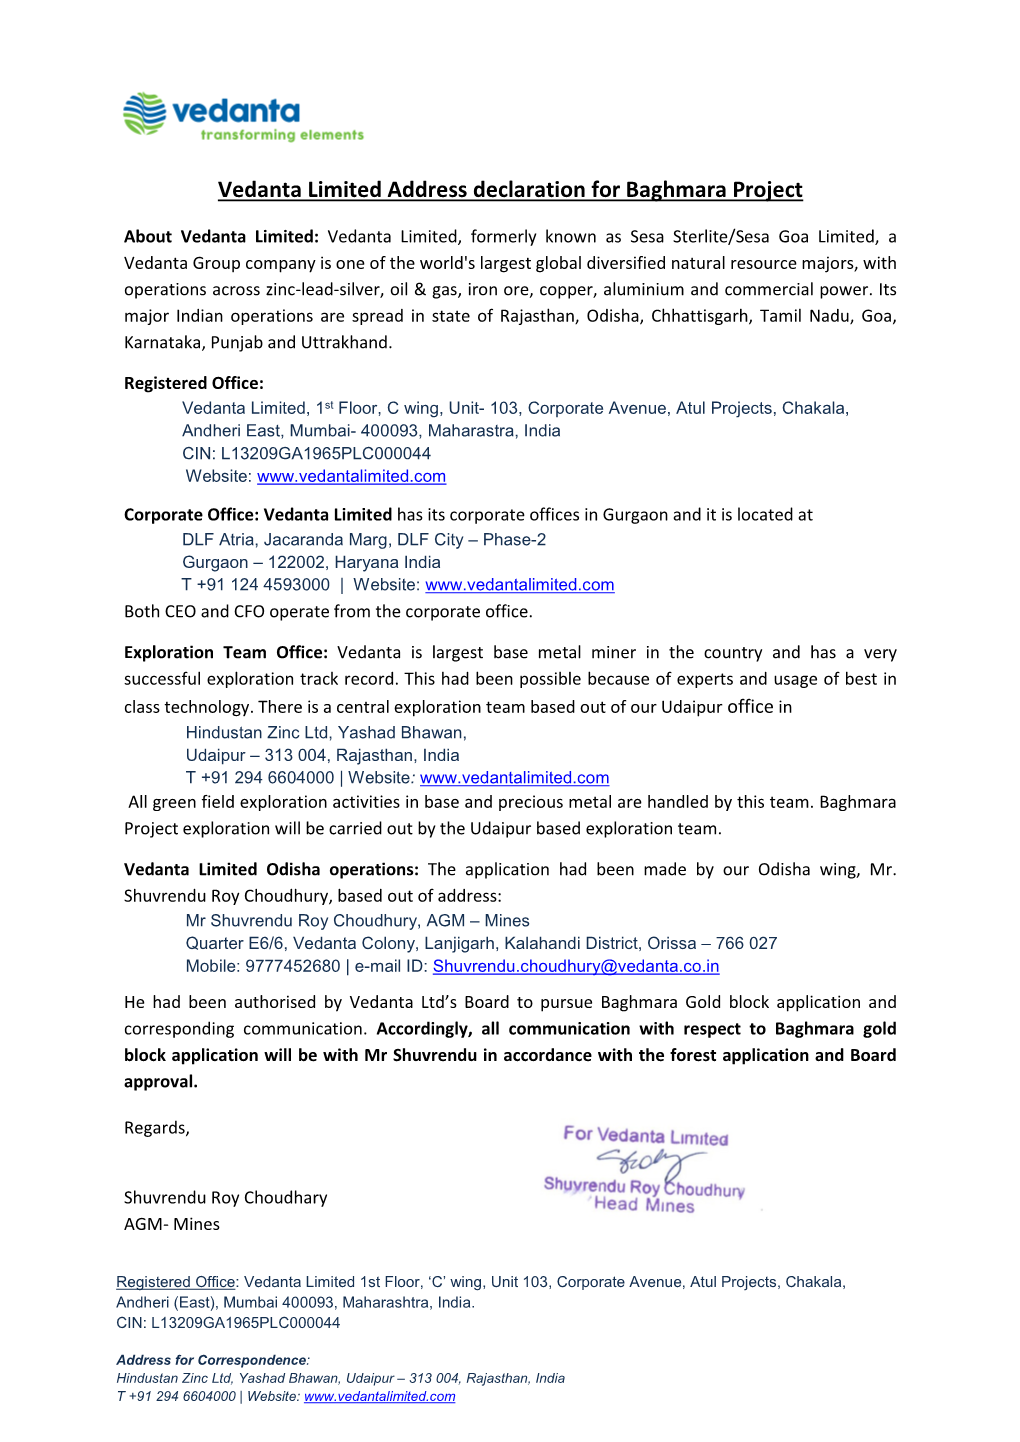 Vedanta Limited Address Declaration for Baghmara Project